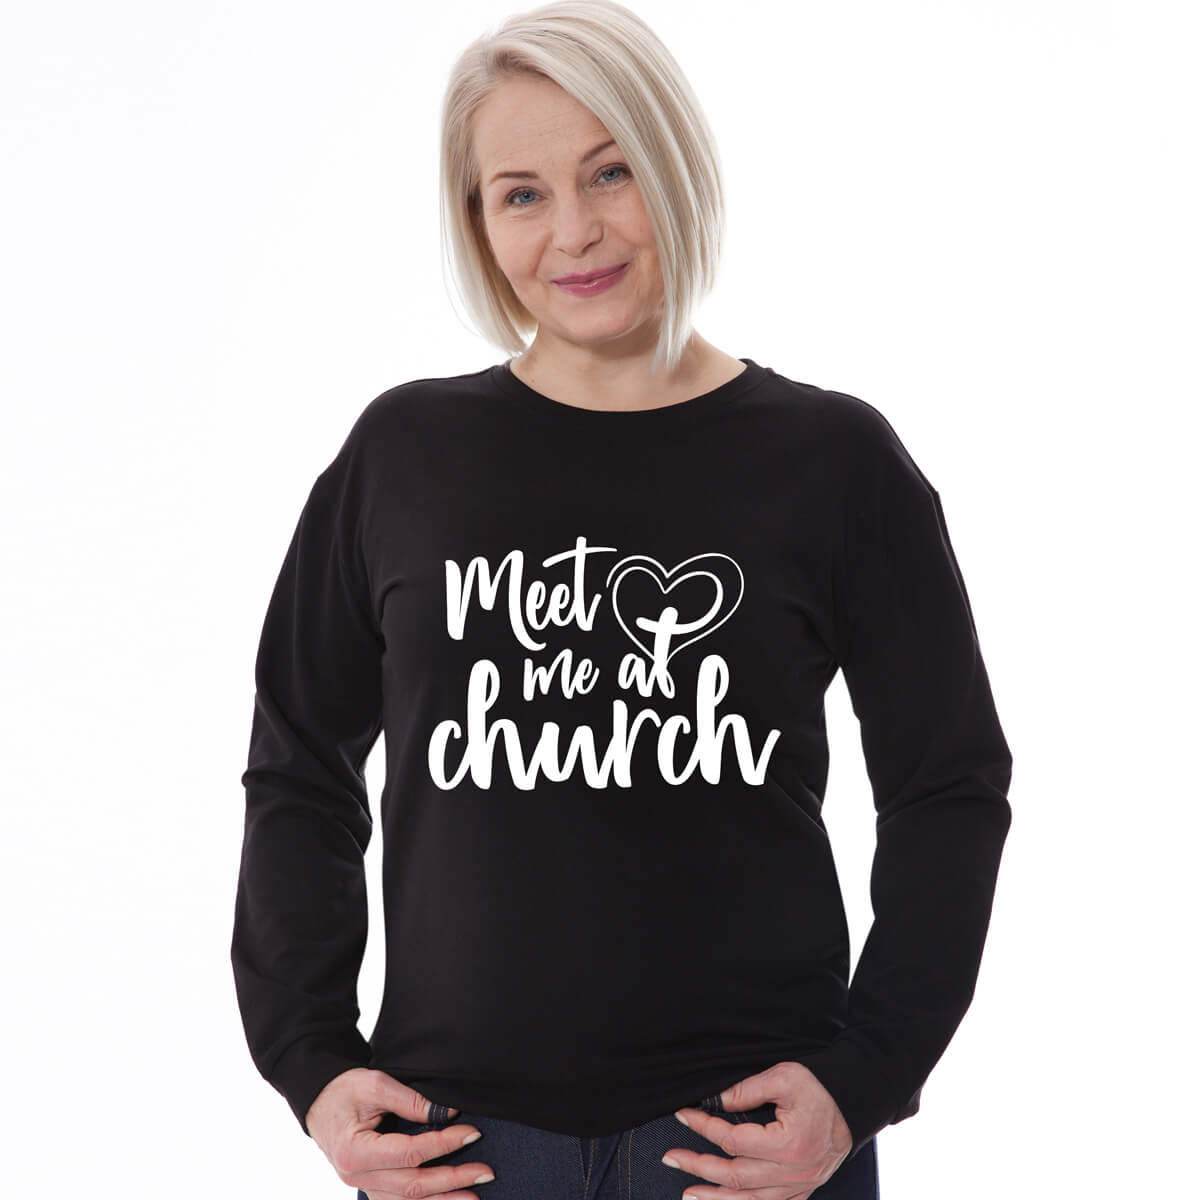 Meet Me At Church Crewneck Sweatshirt